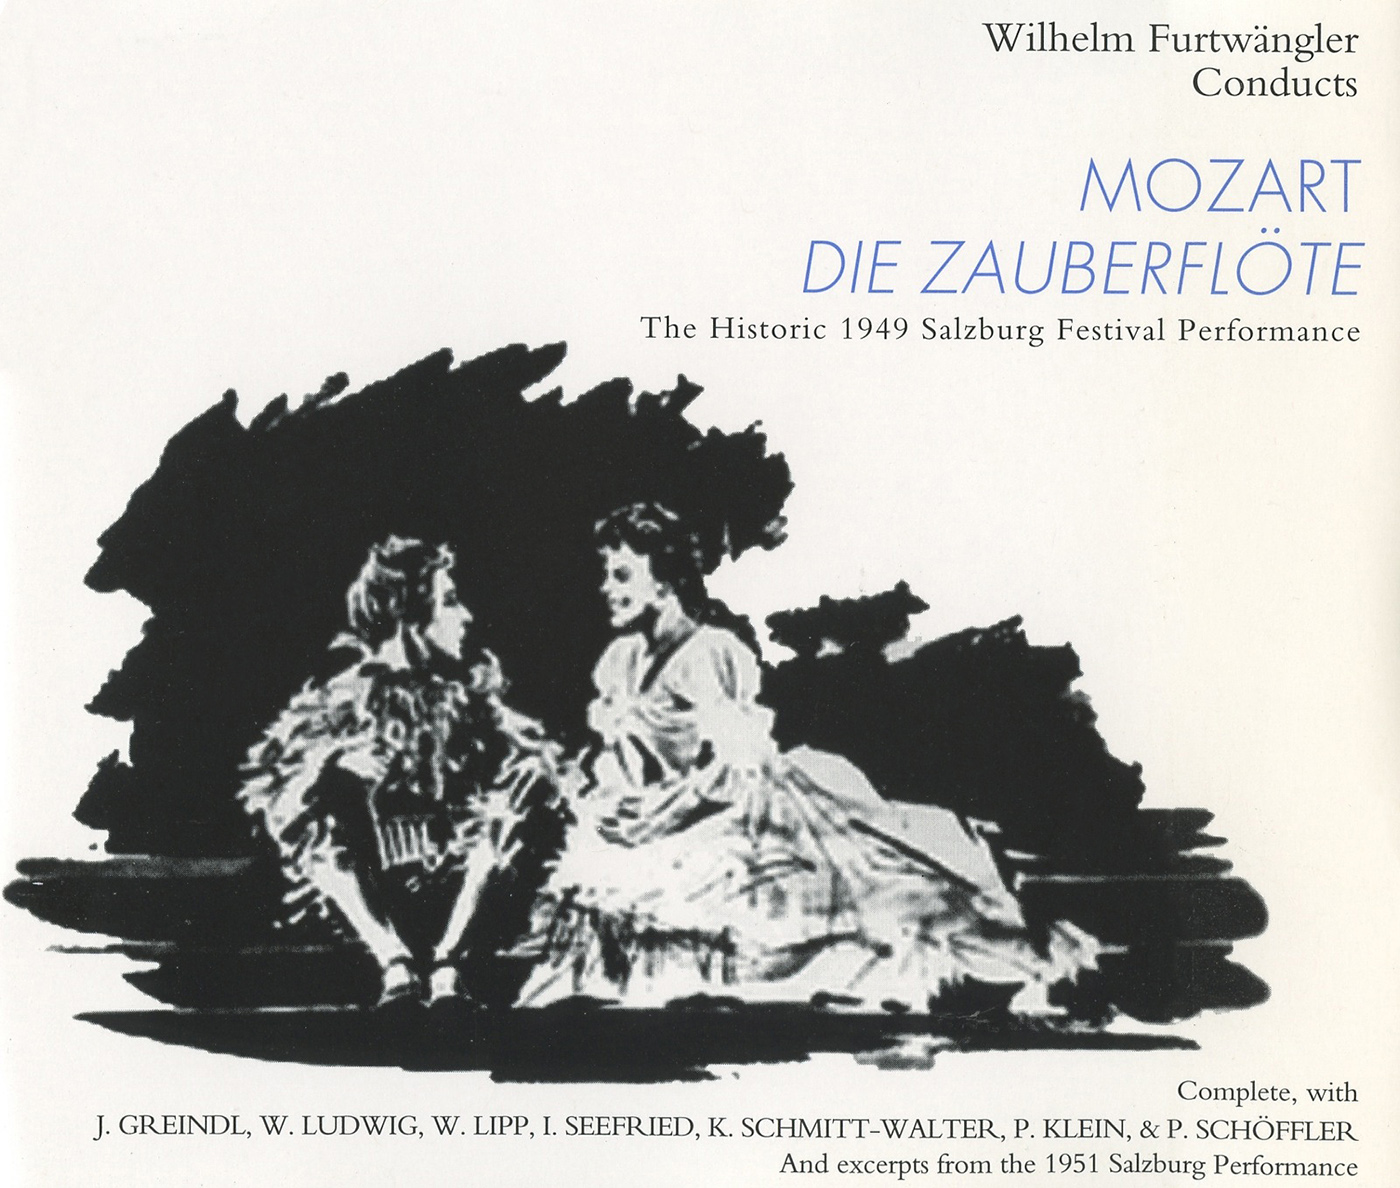 MOZART, W.A.: Zauberflote (Die) (Wilhelm Furtwangler Conducts) (1949, 1951)